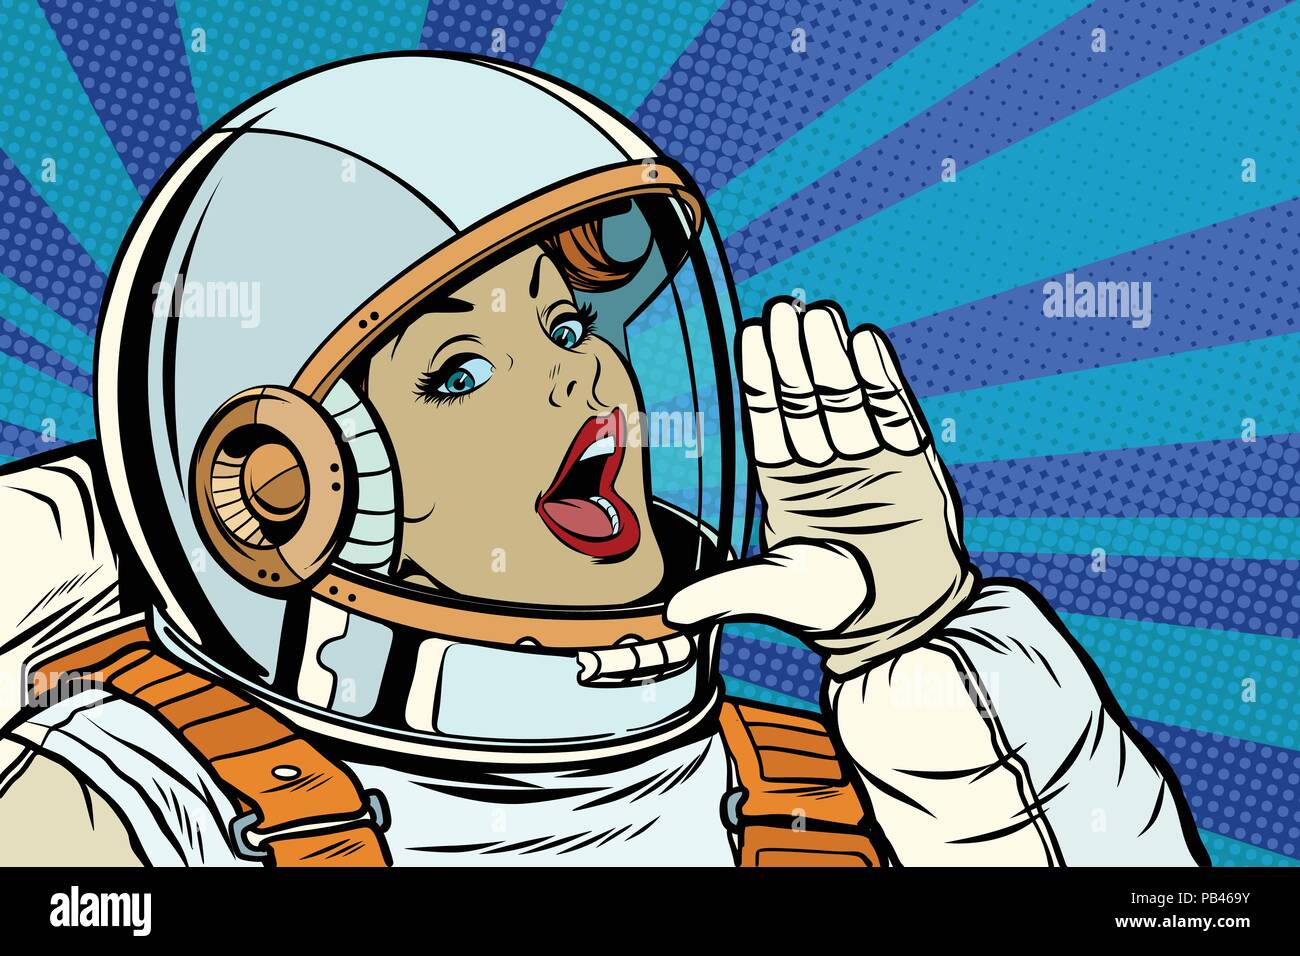 Frau Astronaut um Hilfe ruft Stock Vektor